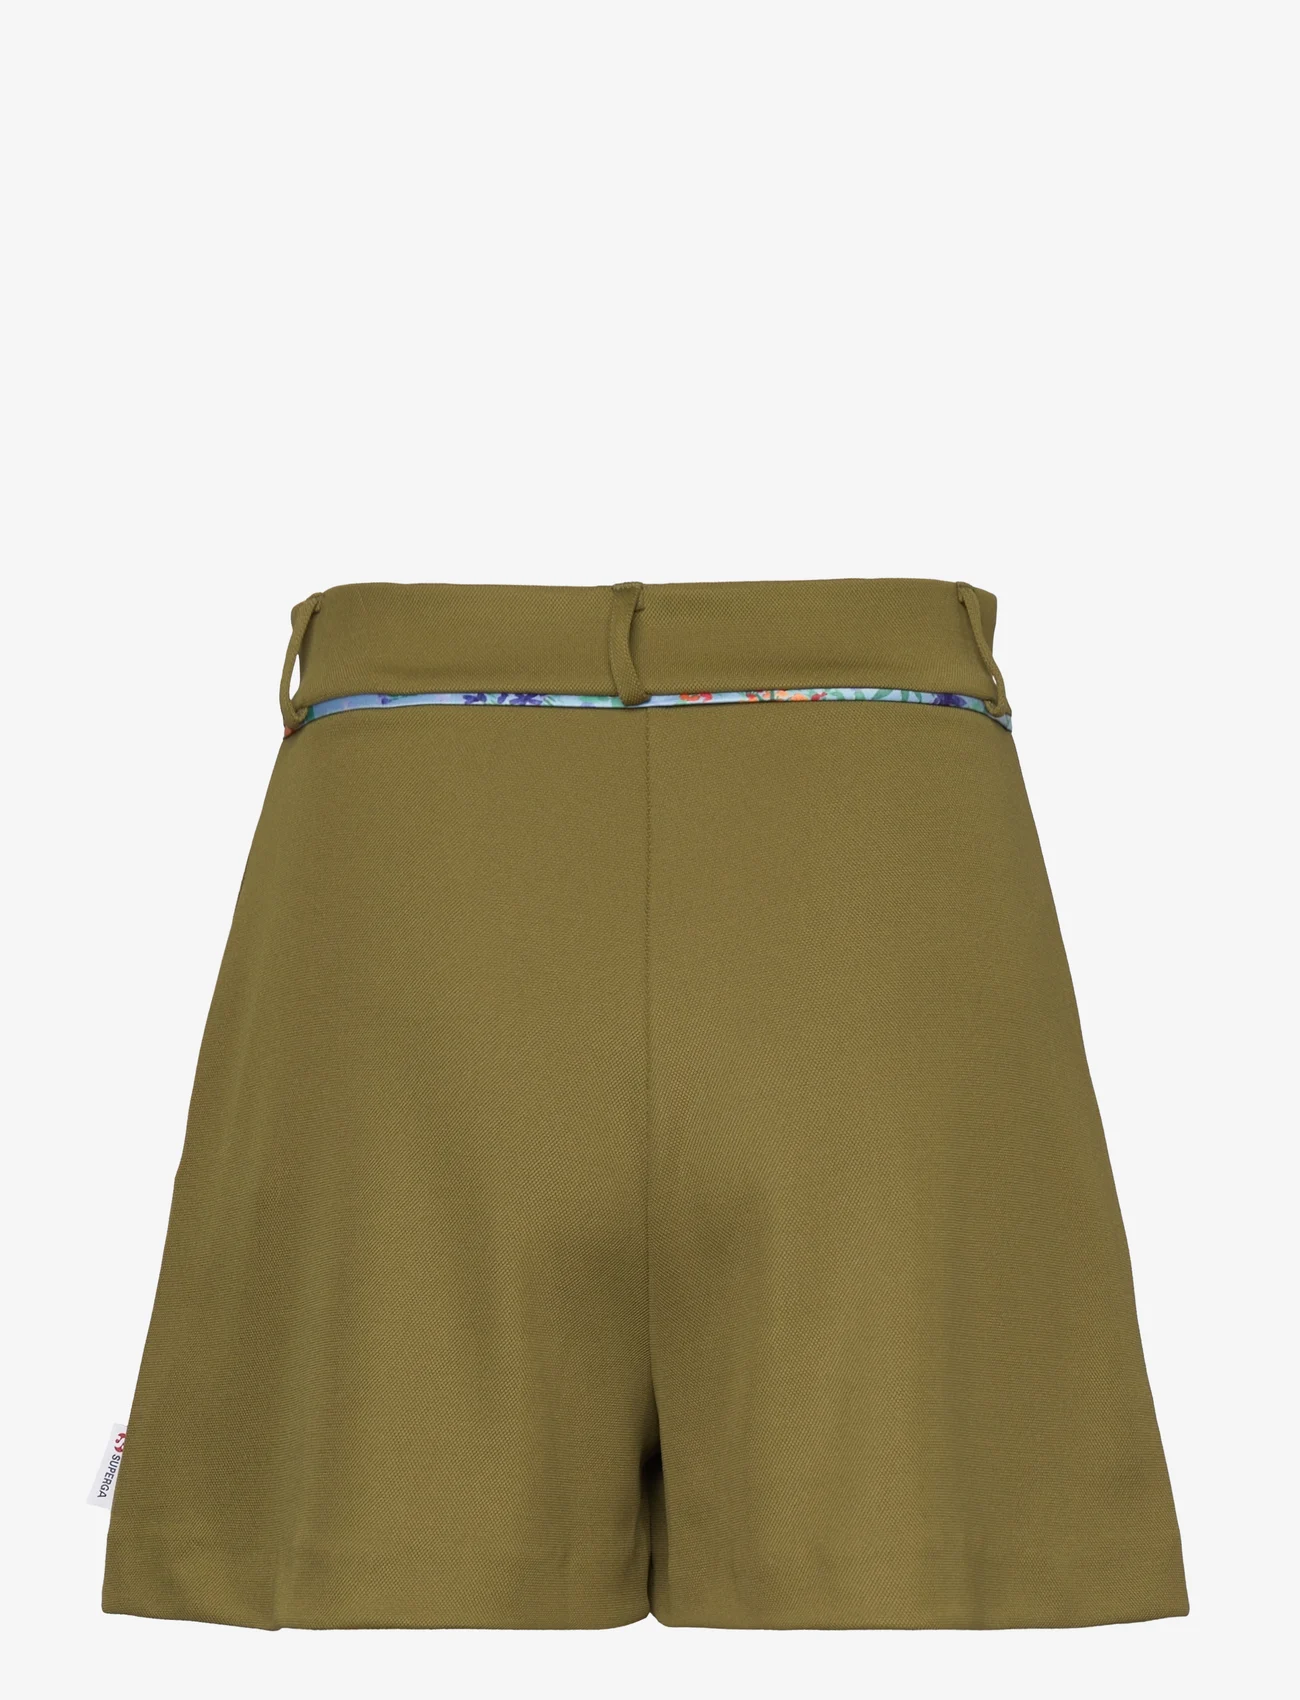 Max&Co. - SLAM - casual shorts - khaki green - 1